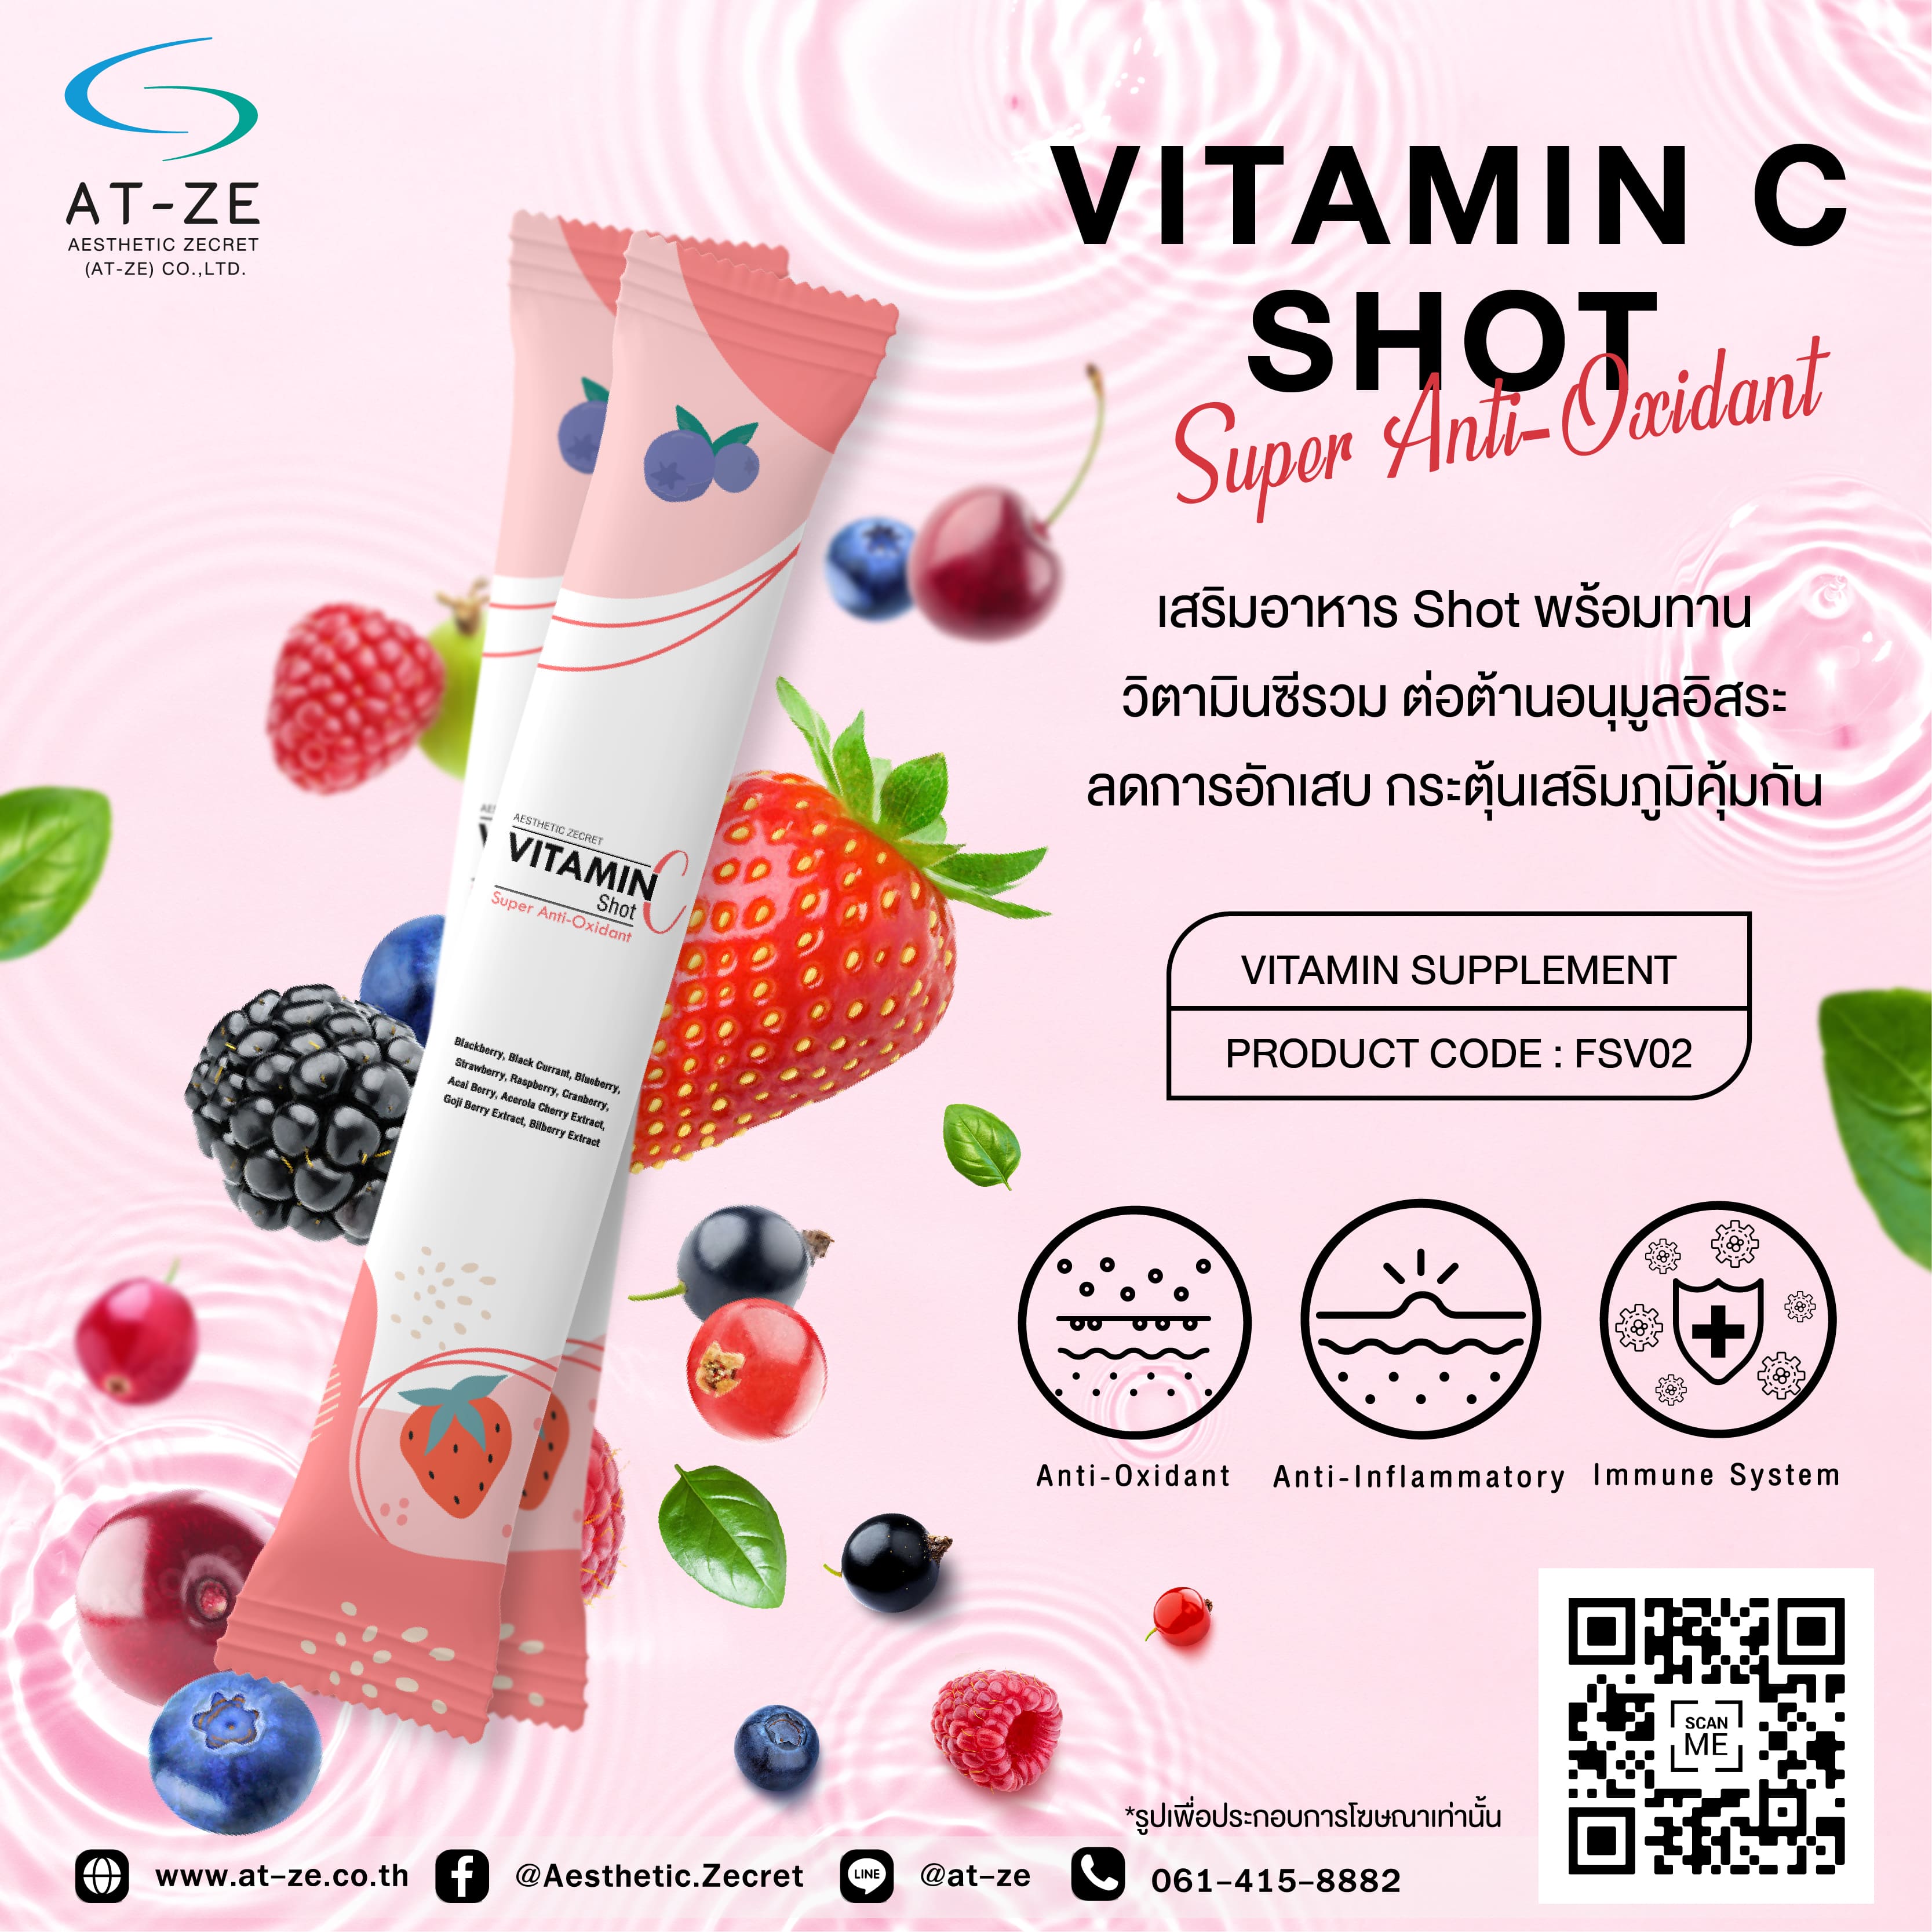 VITAMIN C SHOT (Super Anti-Oxidant)